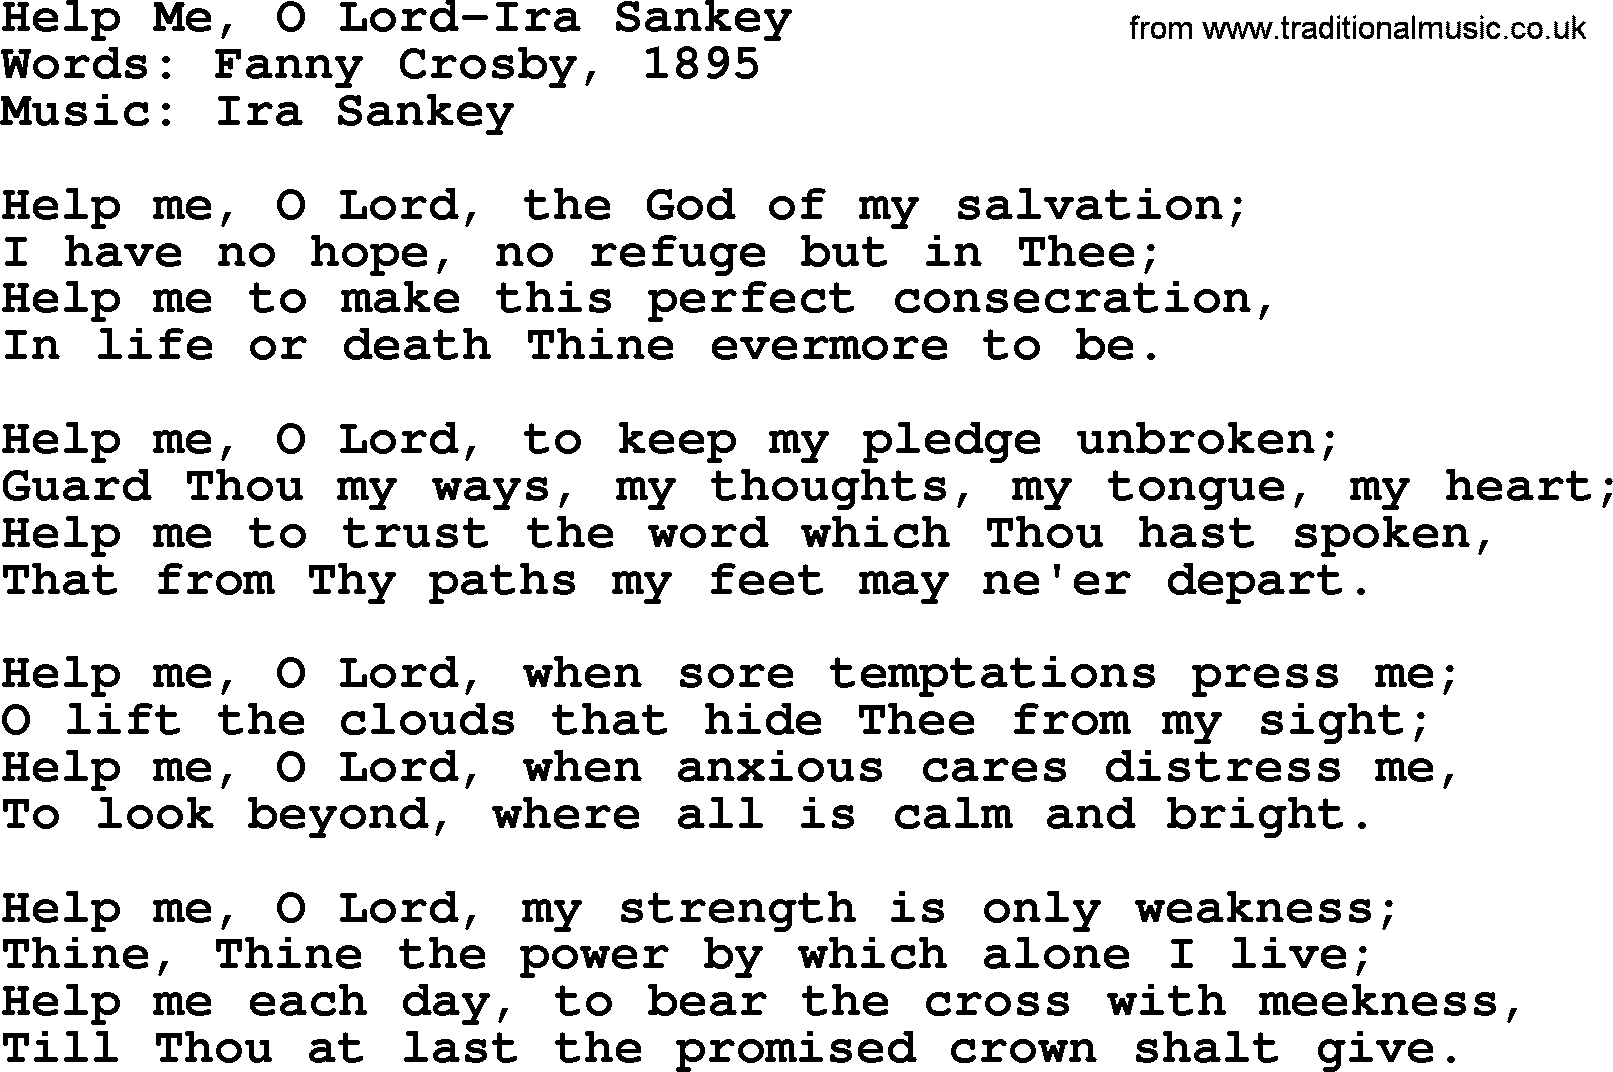 Ira Sankey hymn: Help Me, O Lord-Ira Sankey, lyrics